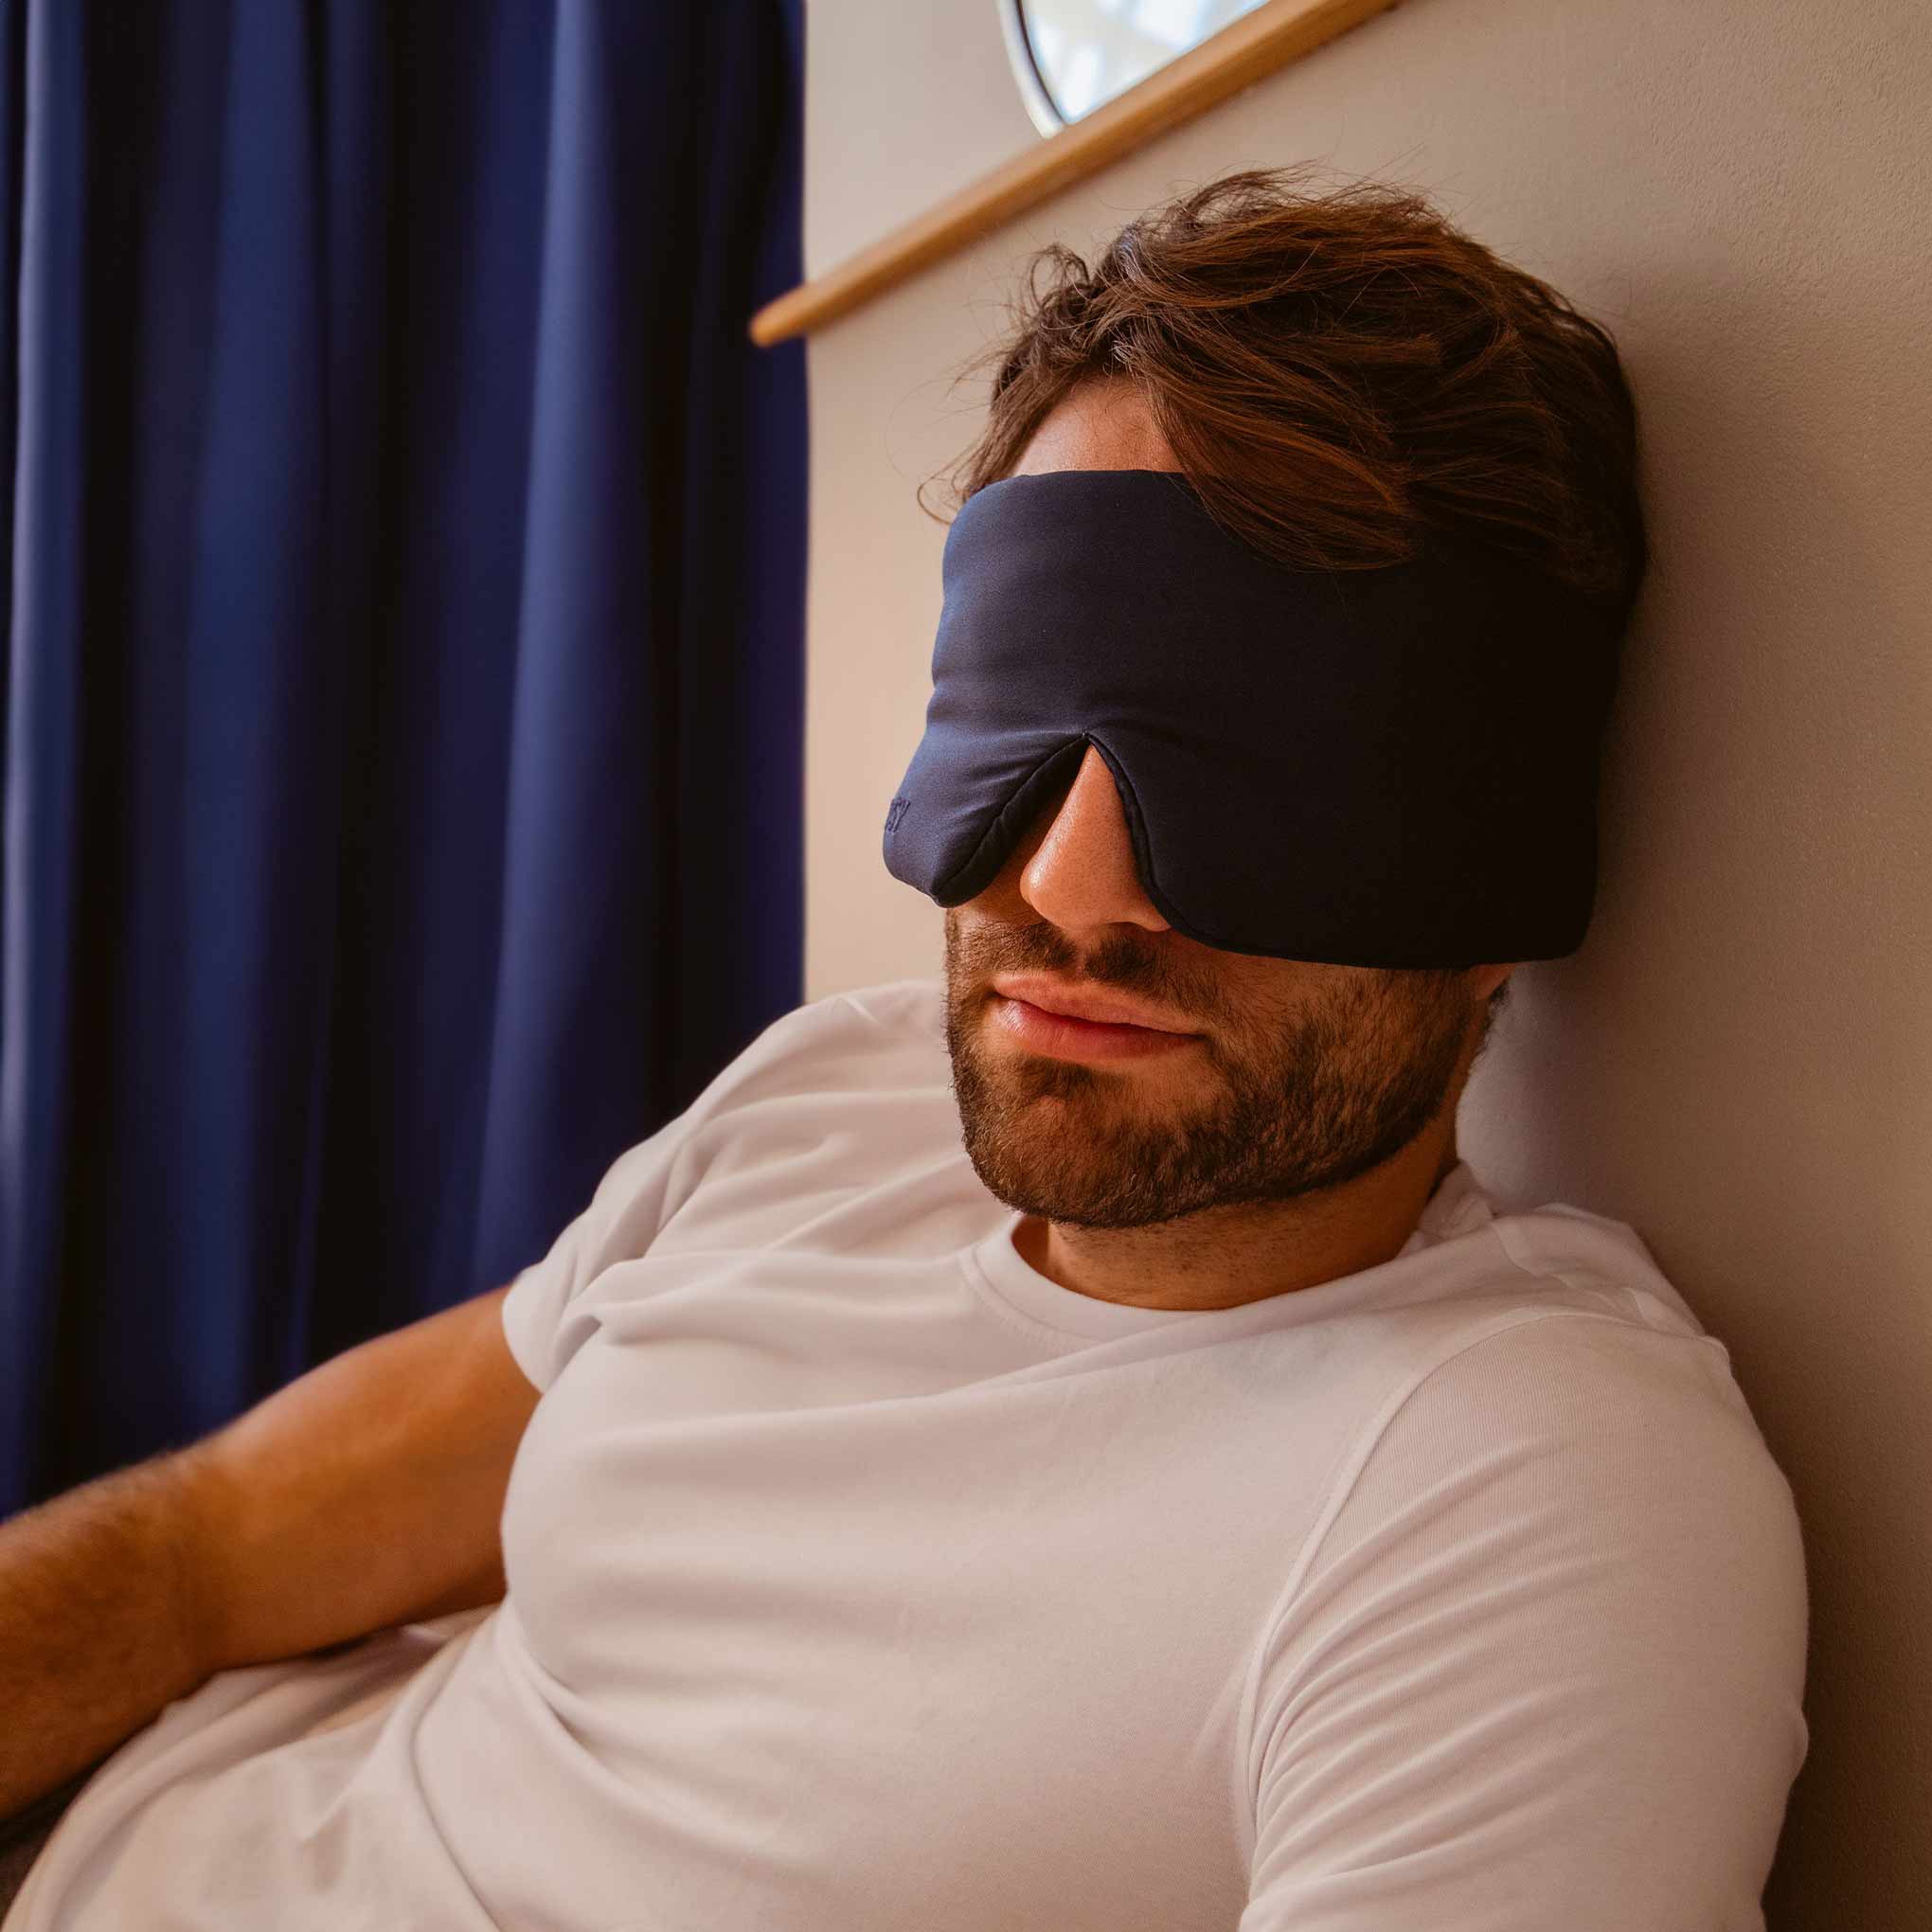 Best Sleeping Beauty Eye Mask - Silk Sleep Eye Masks on SALE Now